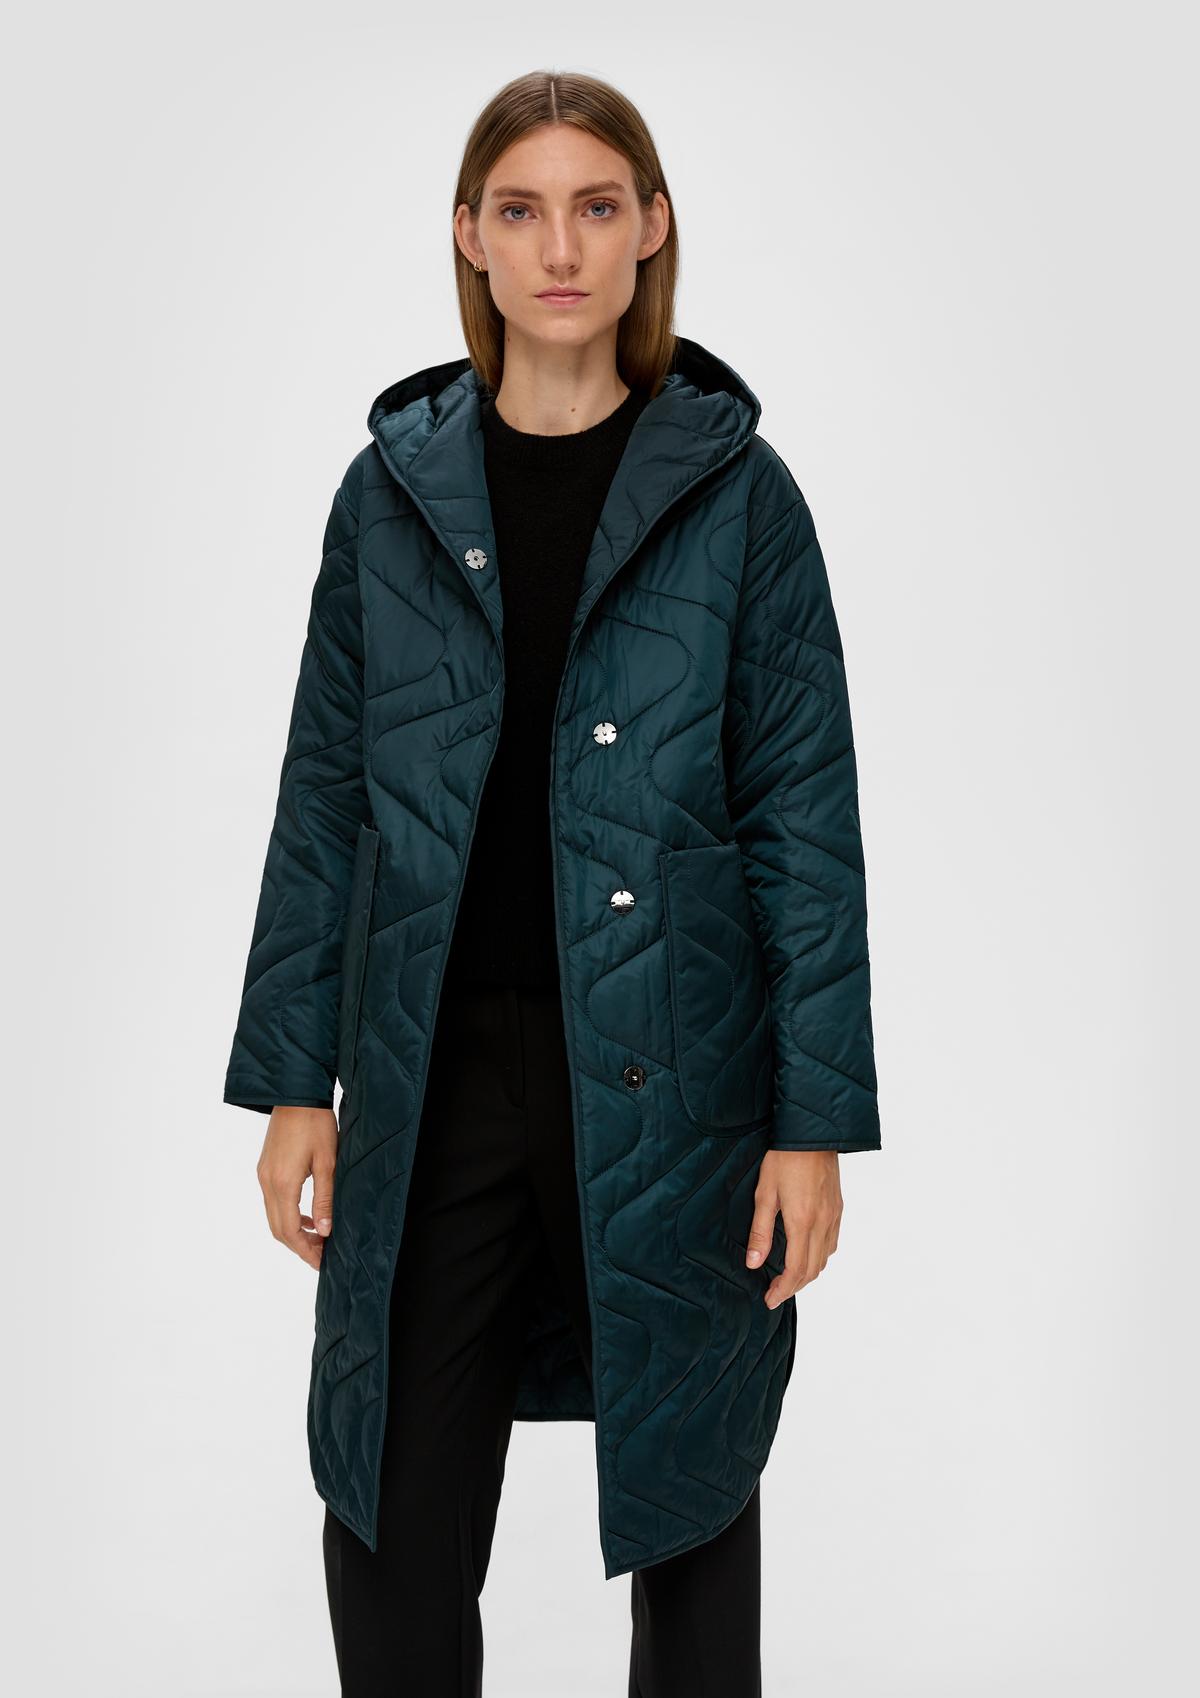 Jackets & Women Coats for